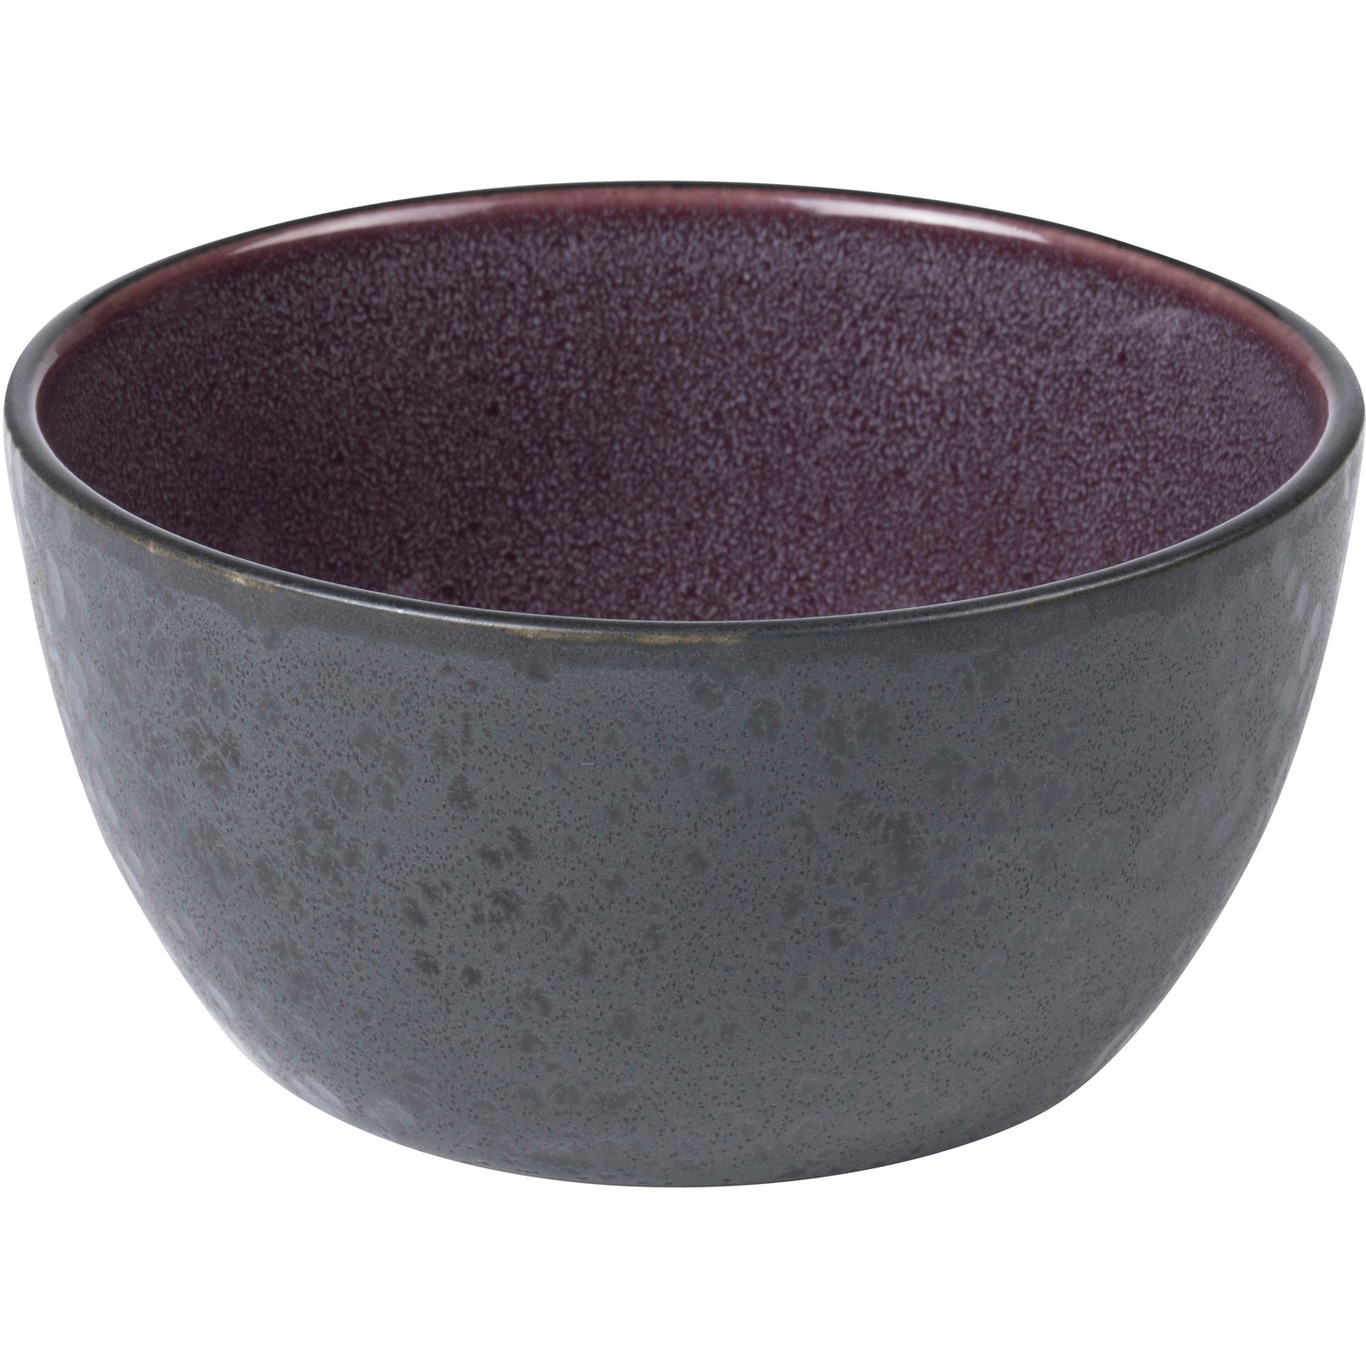 Bitz Bowl 14 cm, Black/Purple